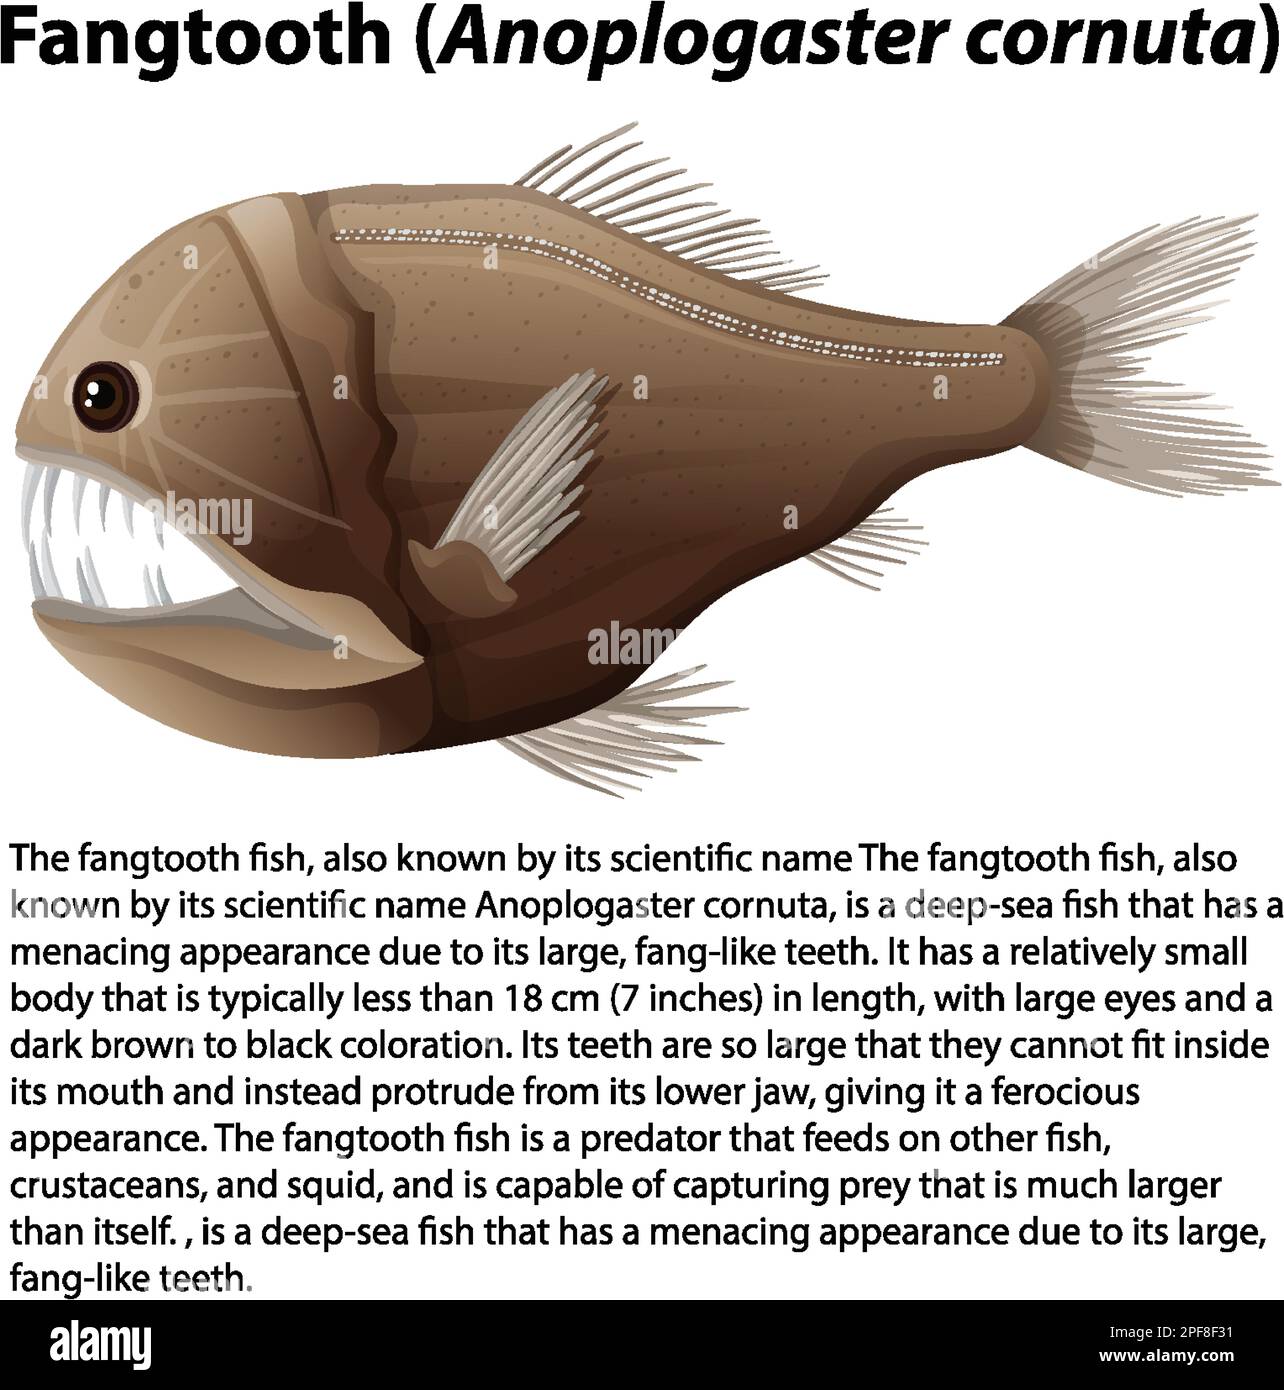 Fangtooth (Anoplogaster cornuta) with Informative Text illustration Stock Vector